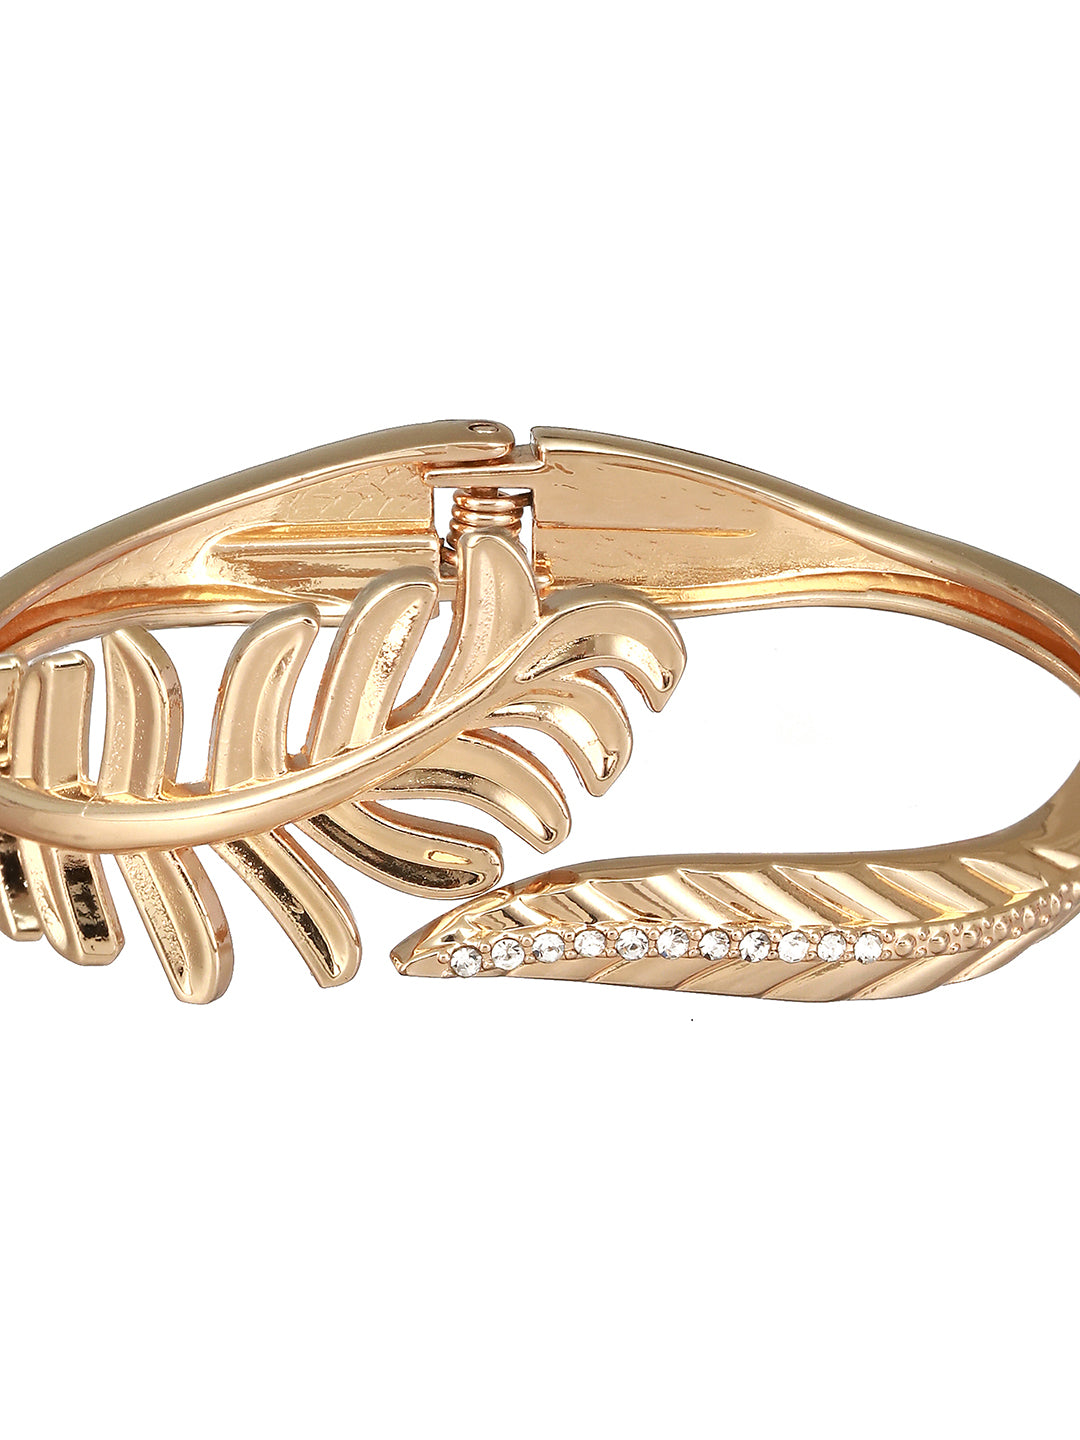 JAZZ AND SIZZLE Gold-Plated American Diamond Studded LEAF SHAPED Cuff Bracelet - Jazzandsizzle